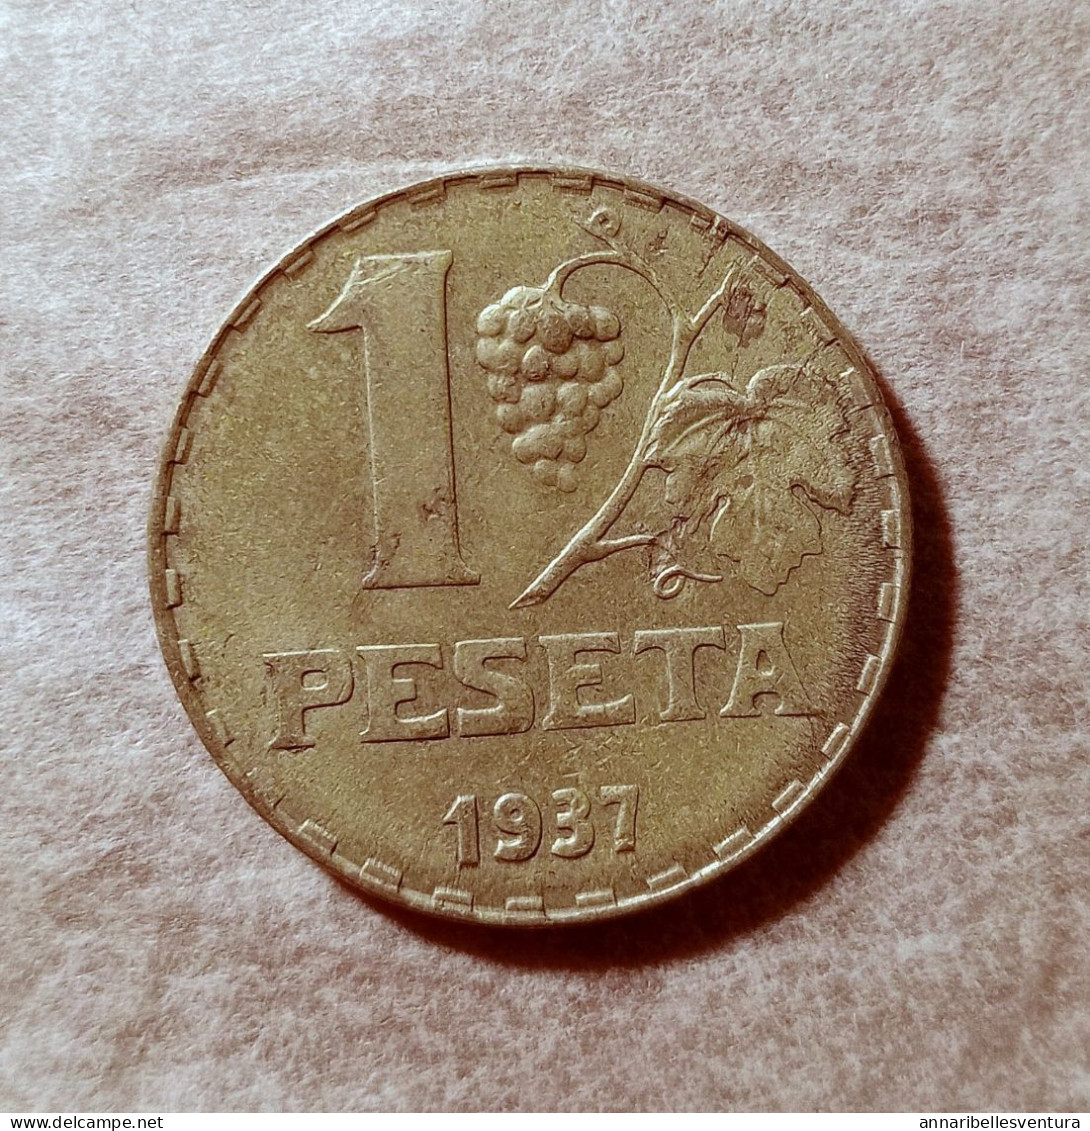 1 PESETA, ALFONSO XIII 1937. - Republikeinse Zone